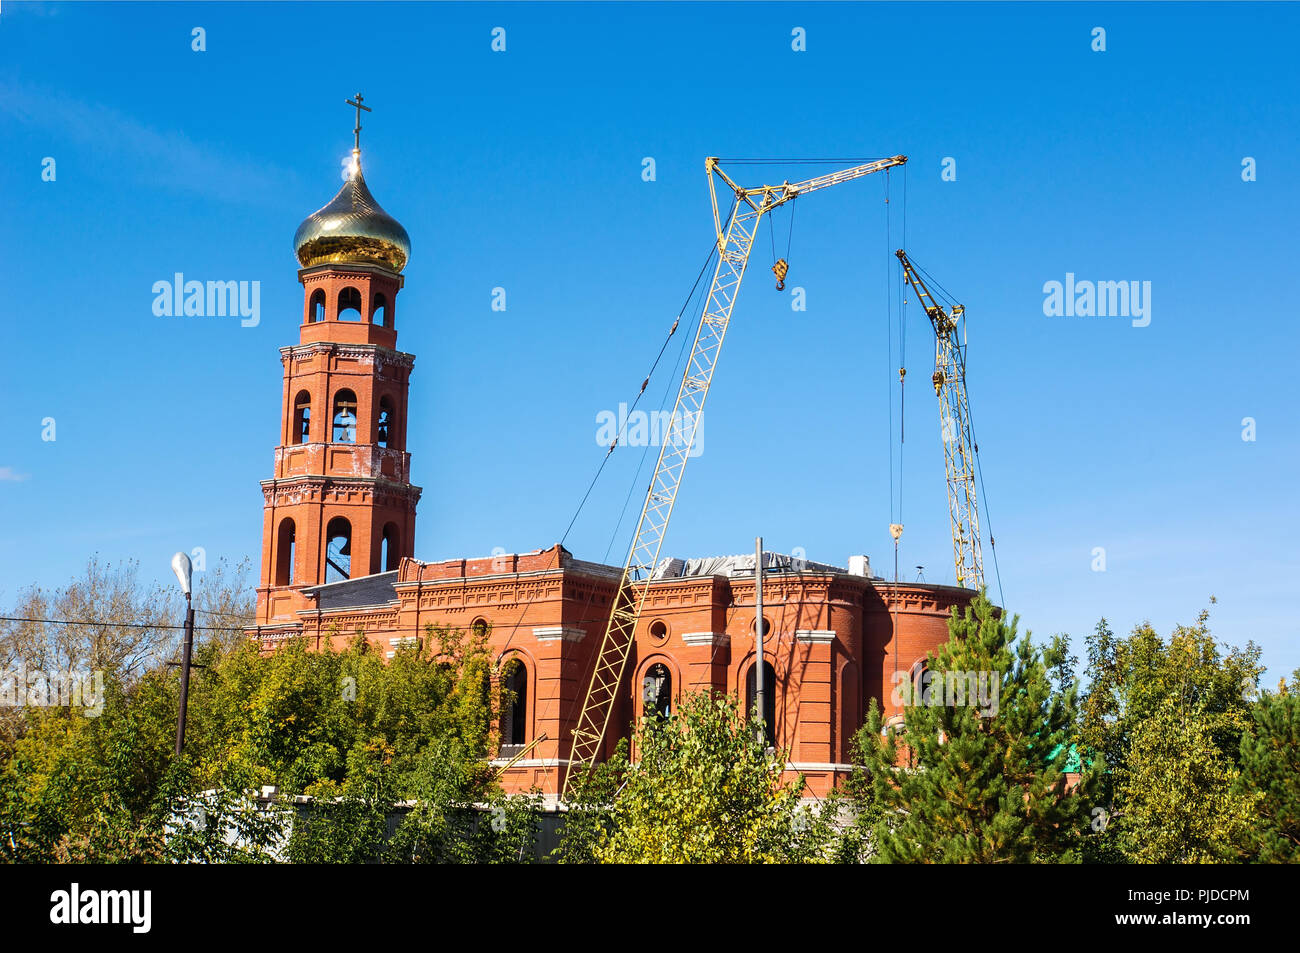 Iglesia en construcción fotografías e imágenes de alta resolución - Alamy